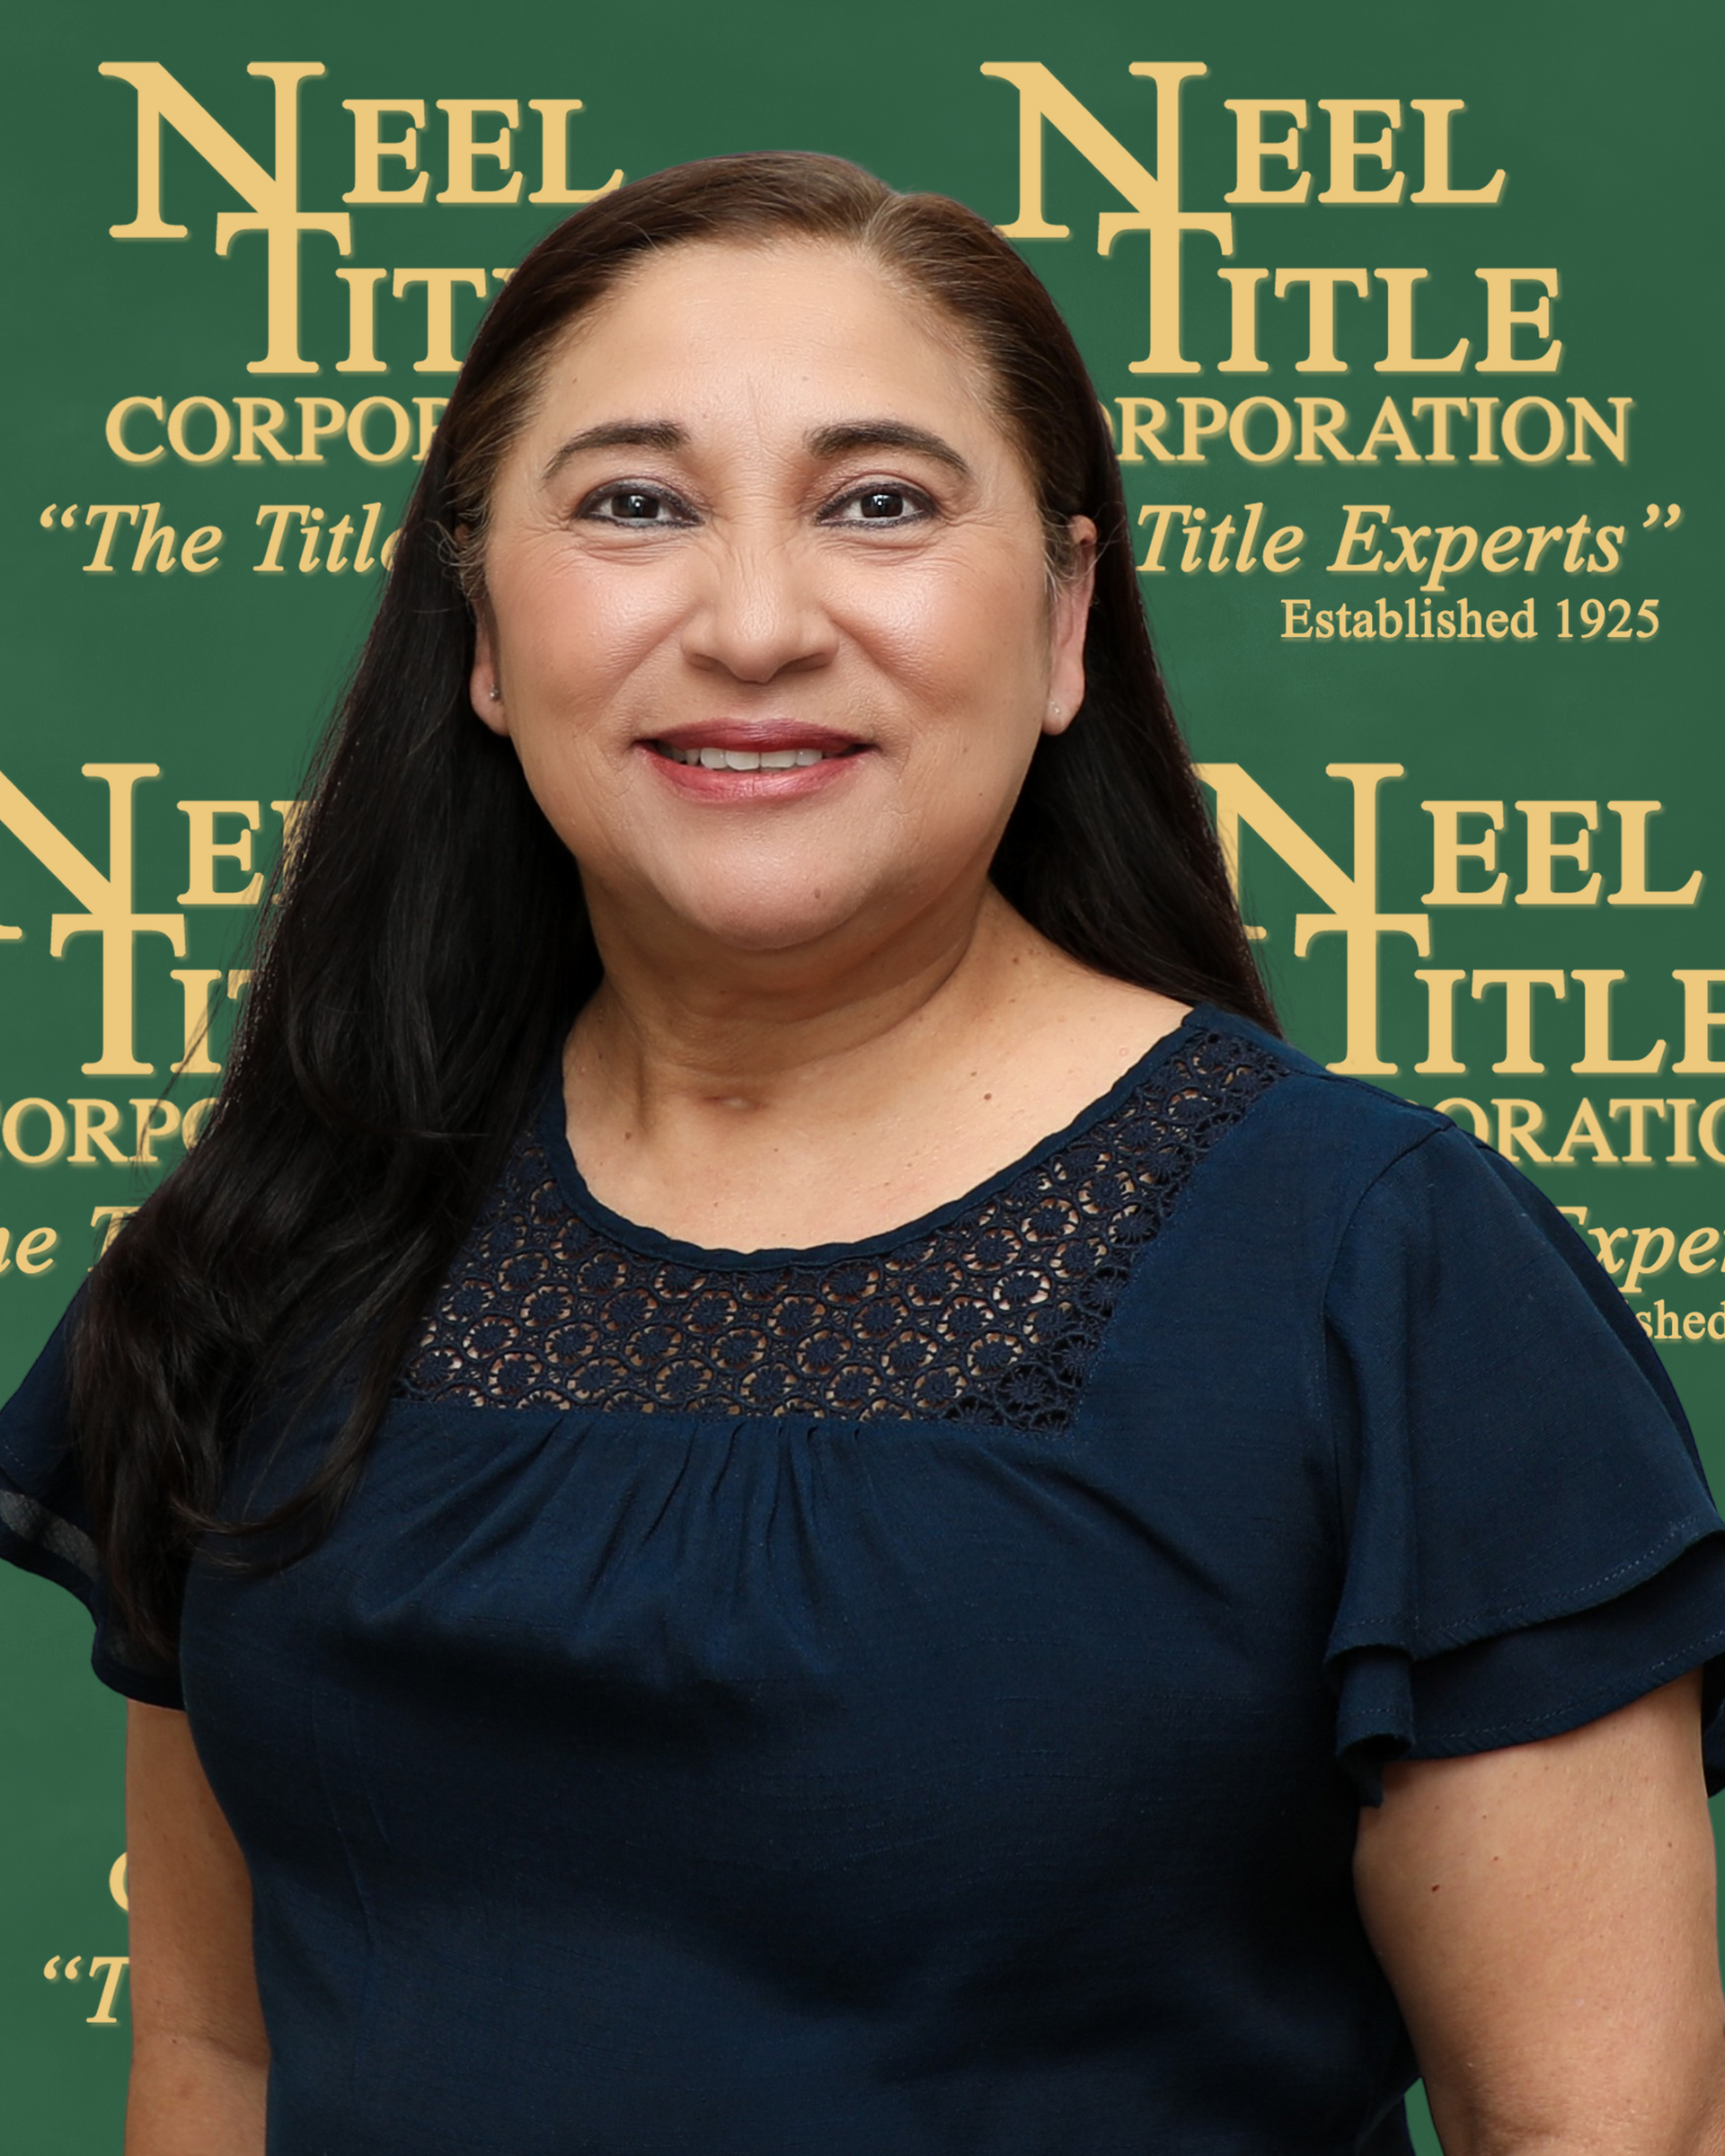 Manuela on Green Background — Laredo, TX — Neel Title